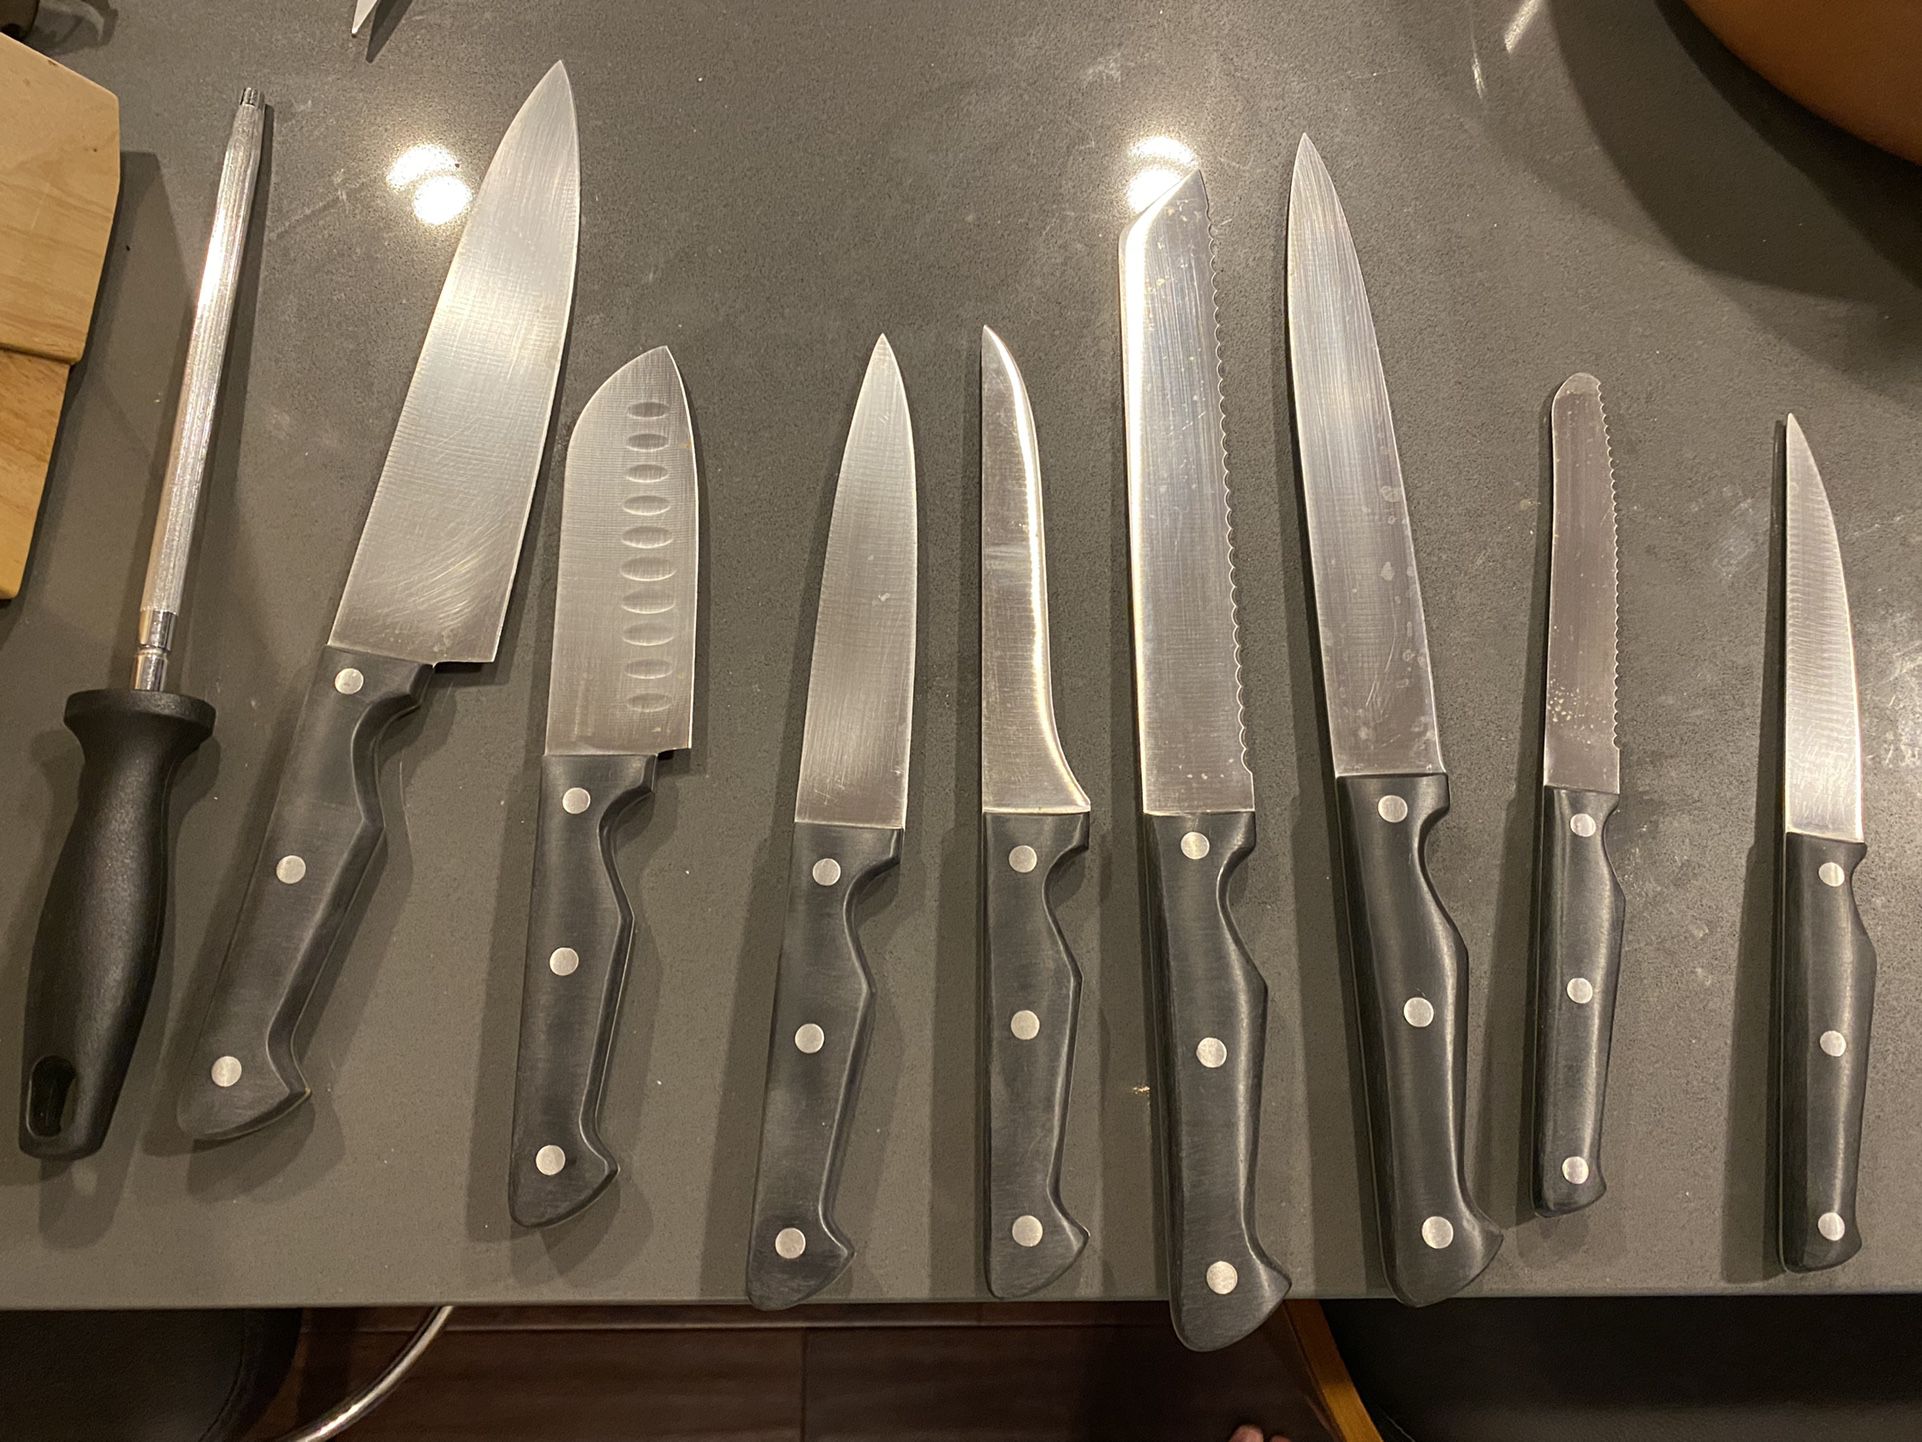 Mueller 17 Piece Professional Knife Set for Sale in Orlando, FL - OfferUp